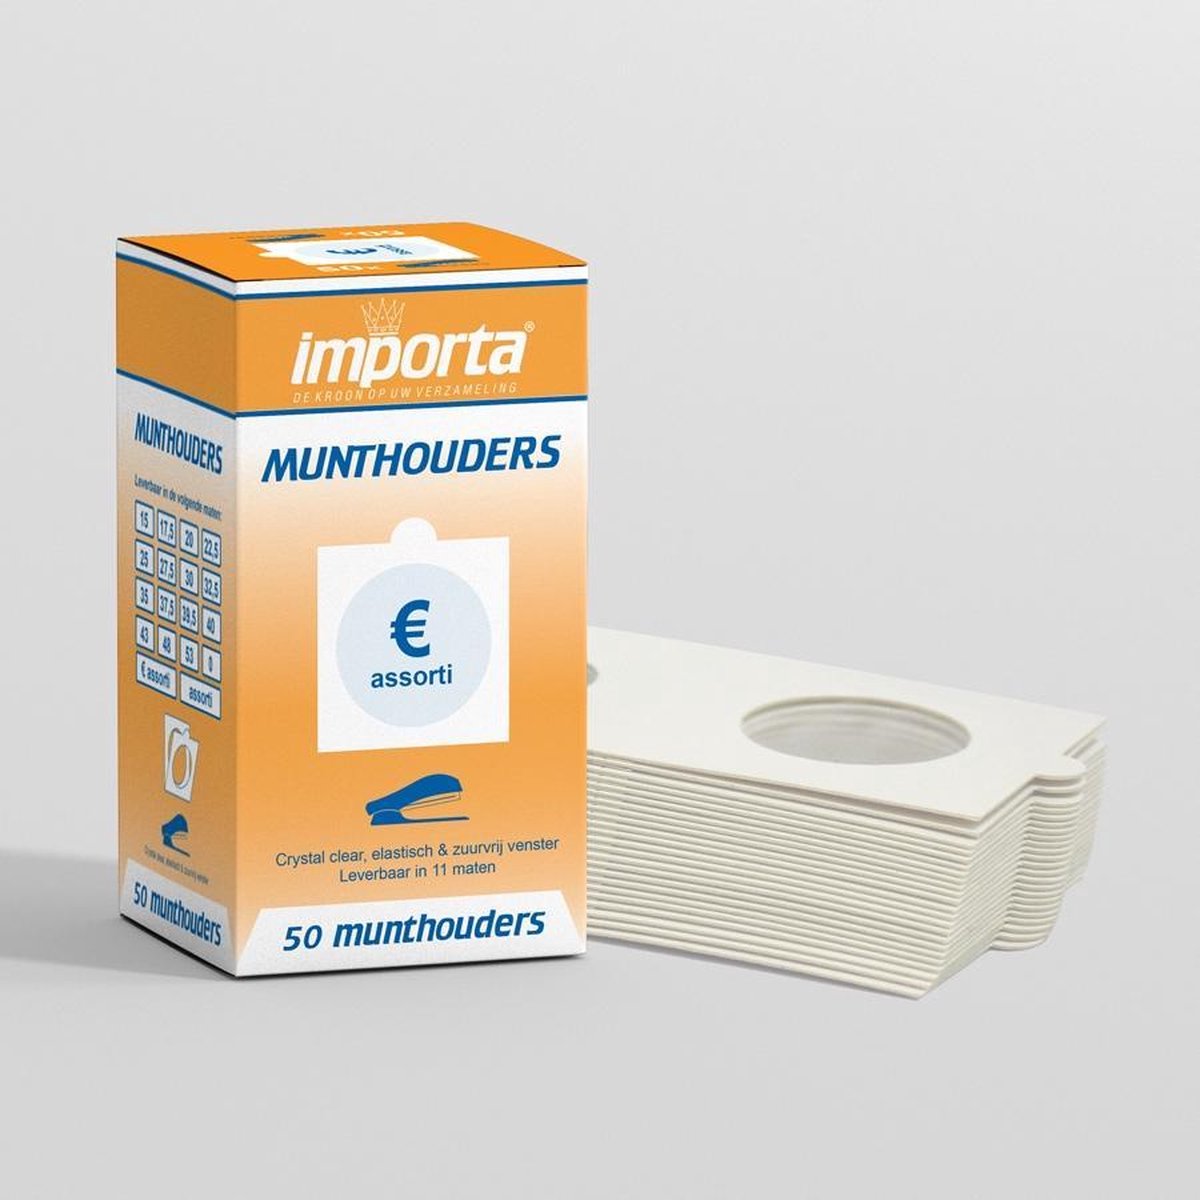 Importa Munthouders om te nieten EUR assortiment - 50 stuks